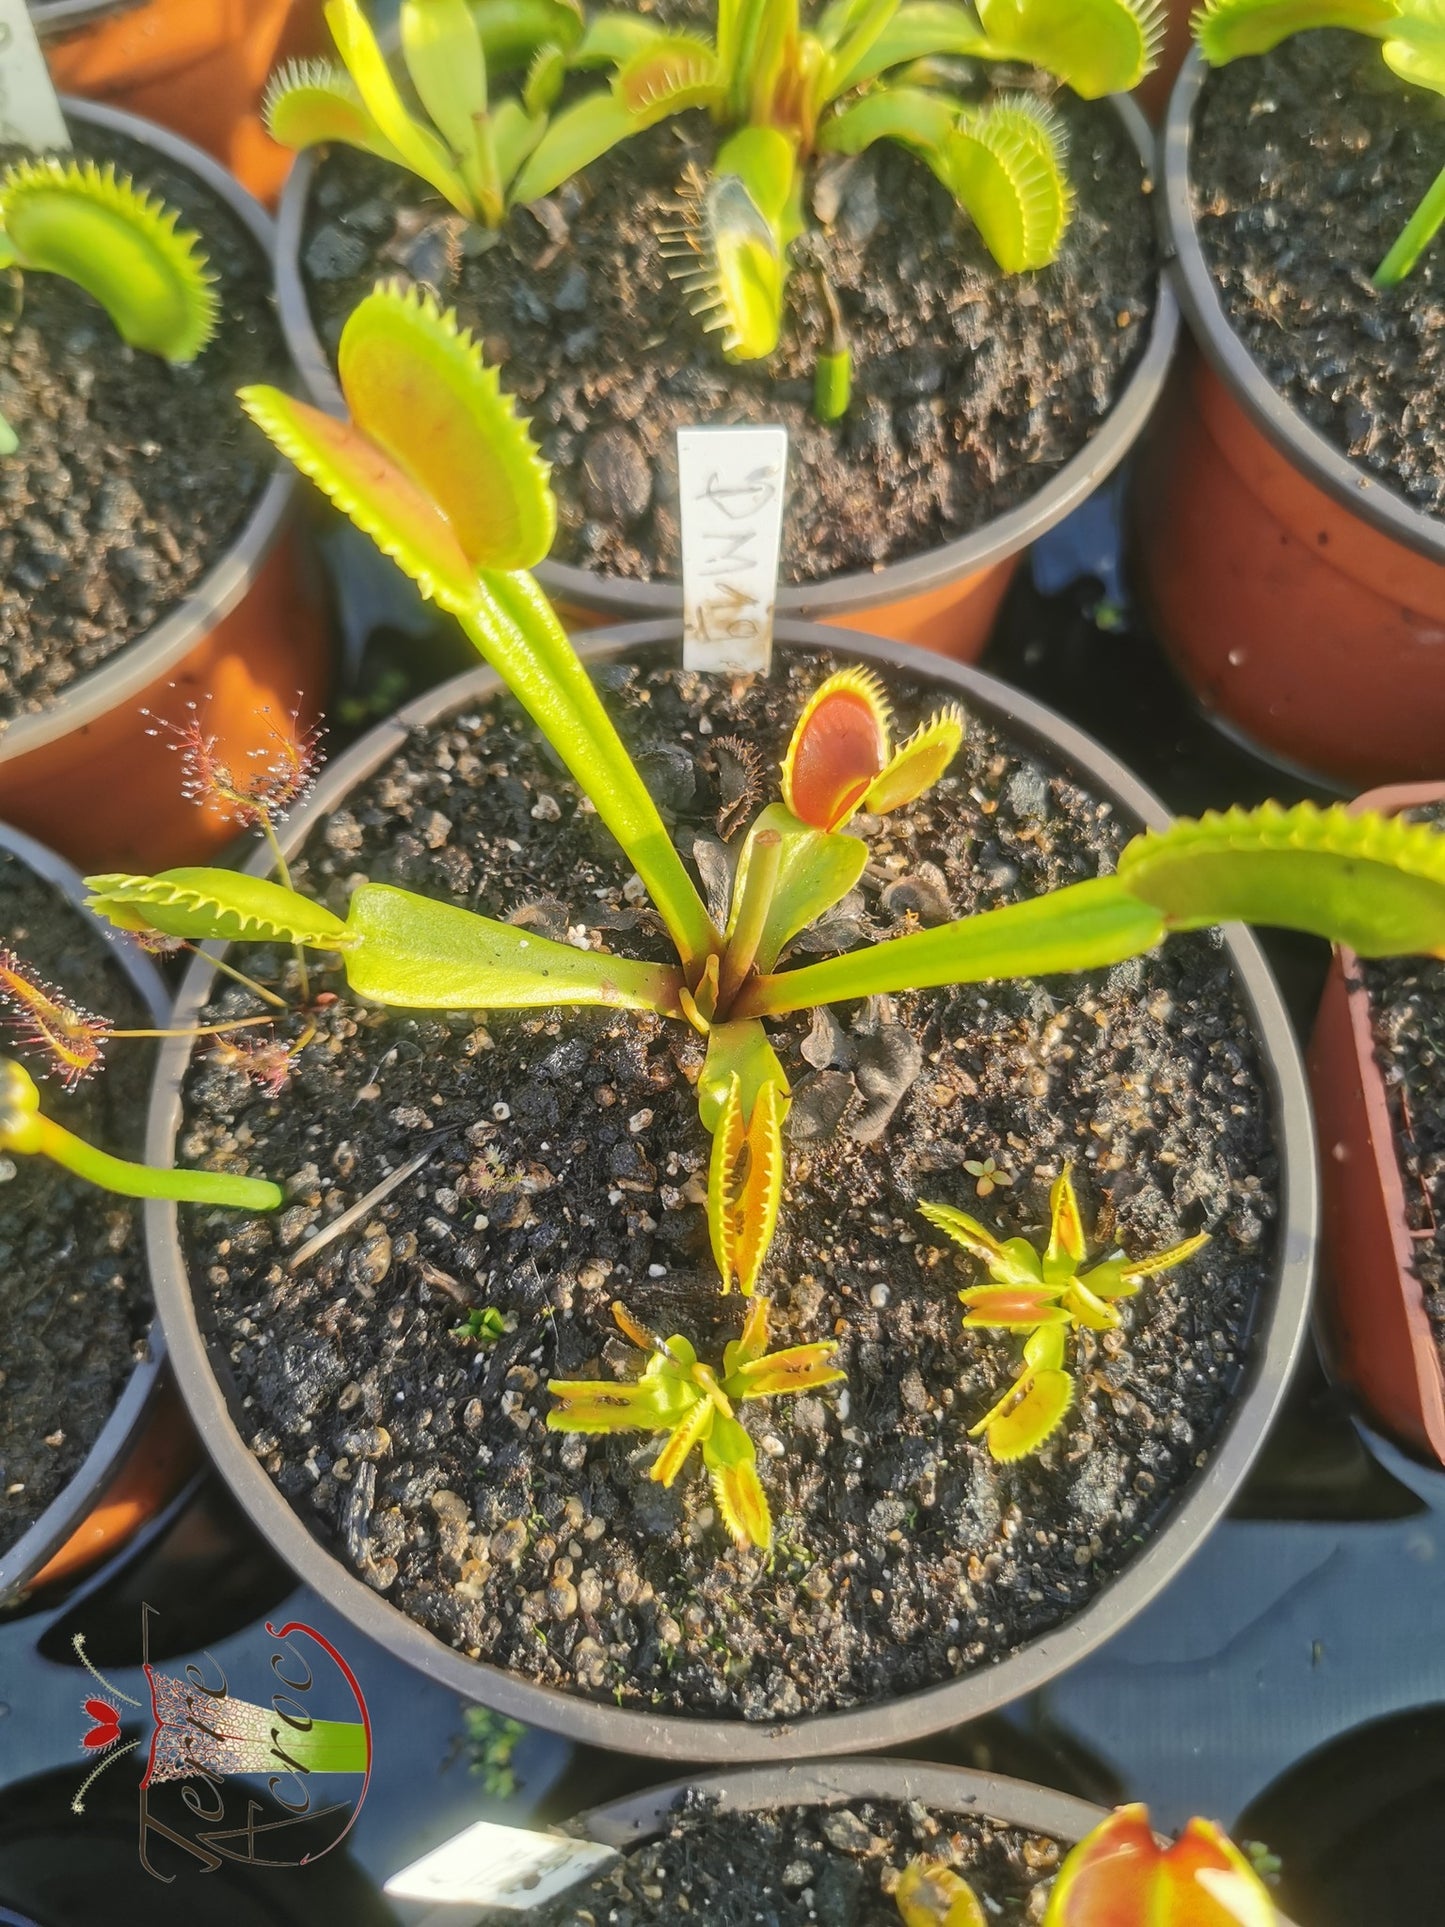 DM19 Dionaea muscipula -- "Toothless"